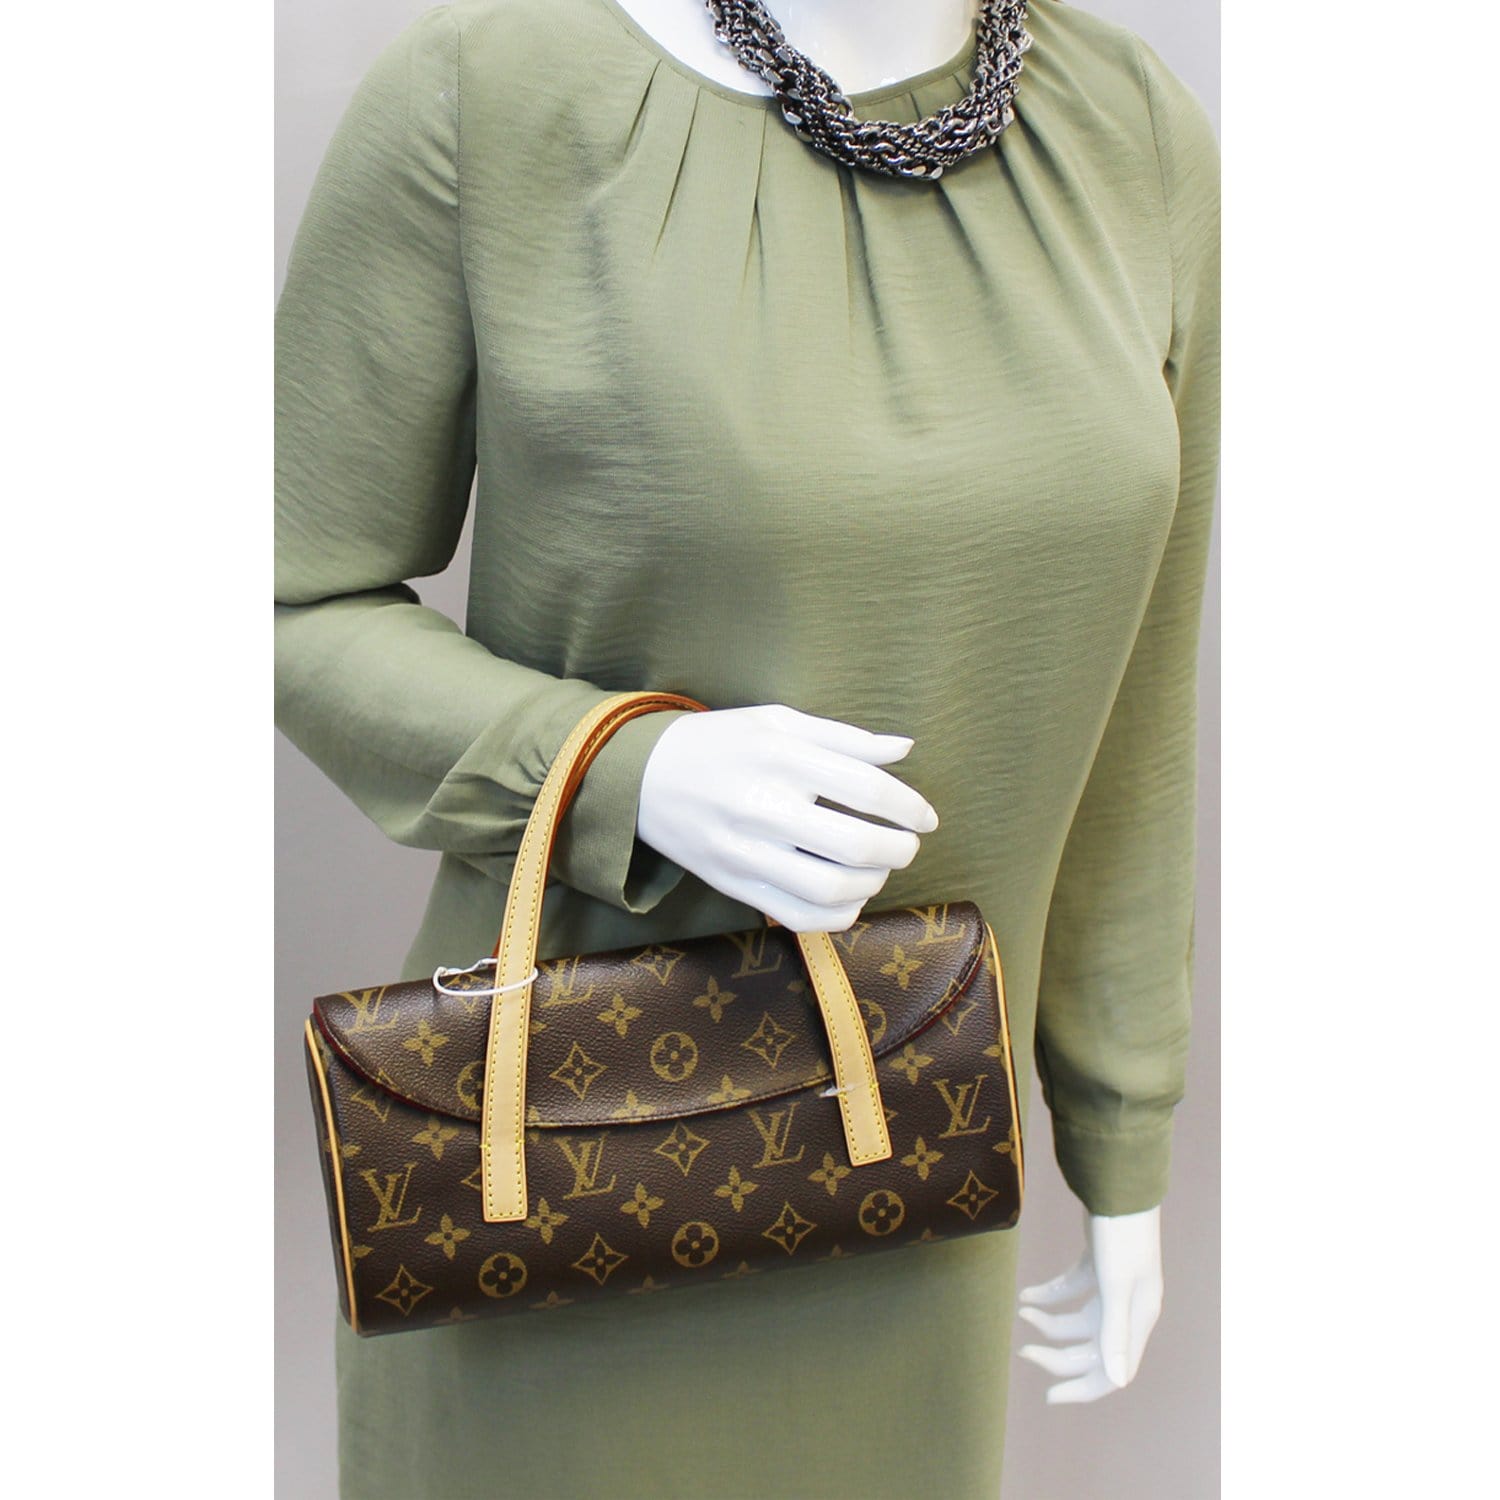 Vintage Louis Vuitton Sonatine handbag - Authentic! for Sale in